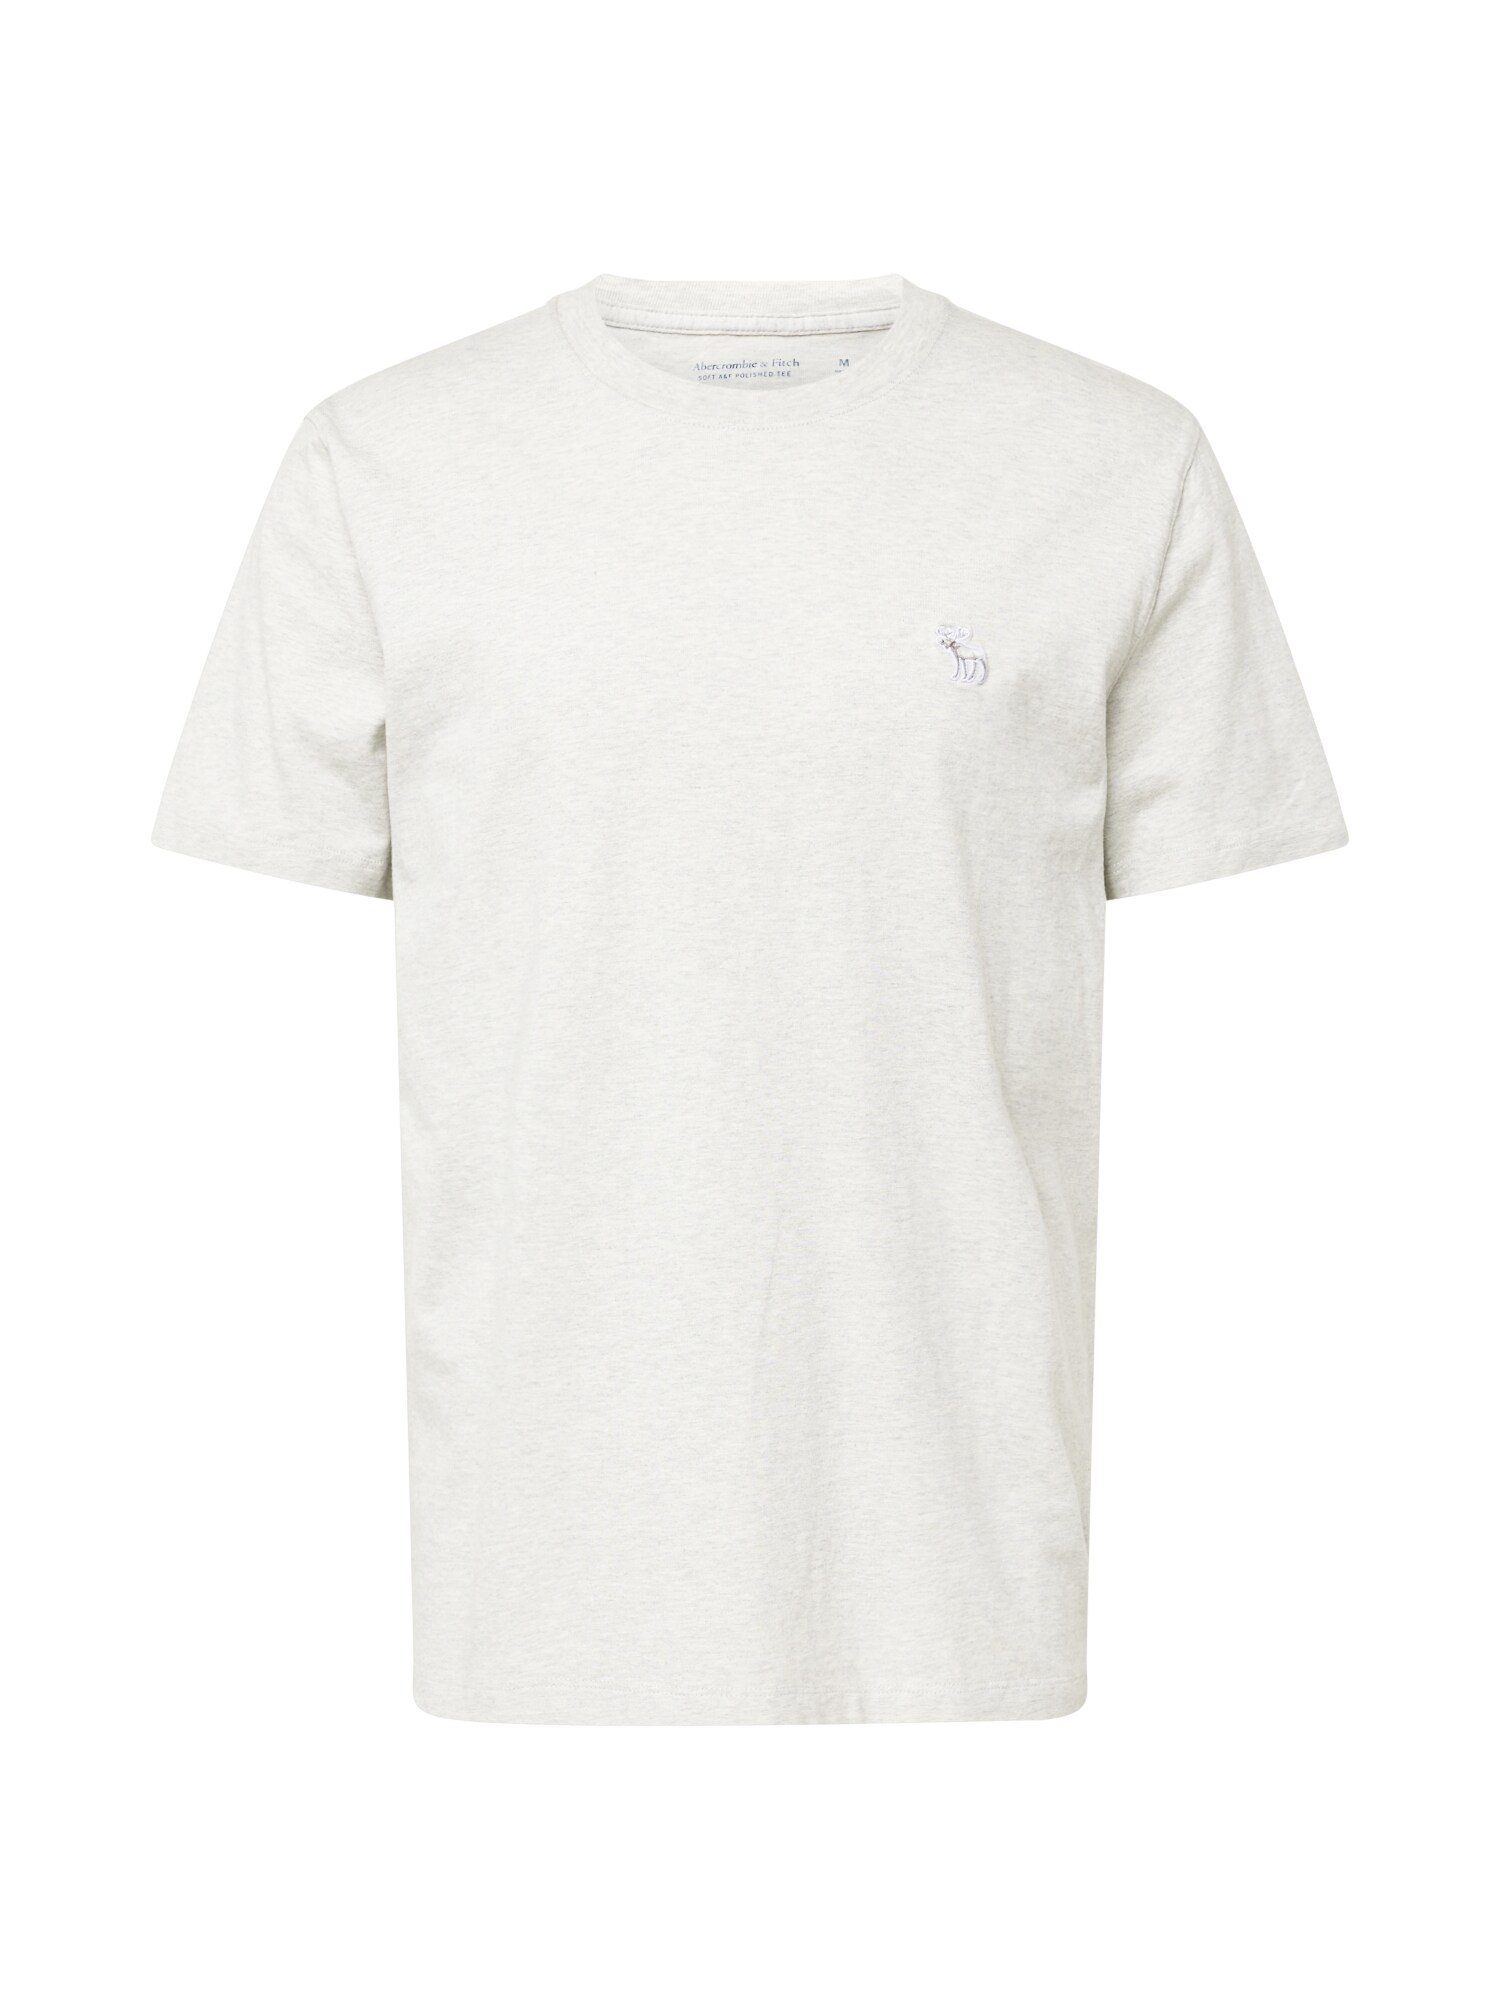 Abercrombie & Fitch Marškinėliai margai pilka / balta